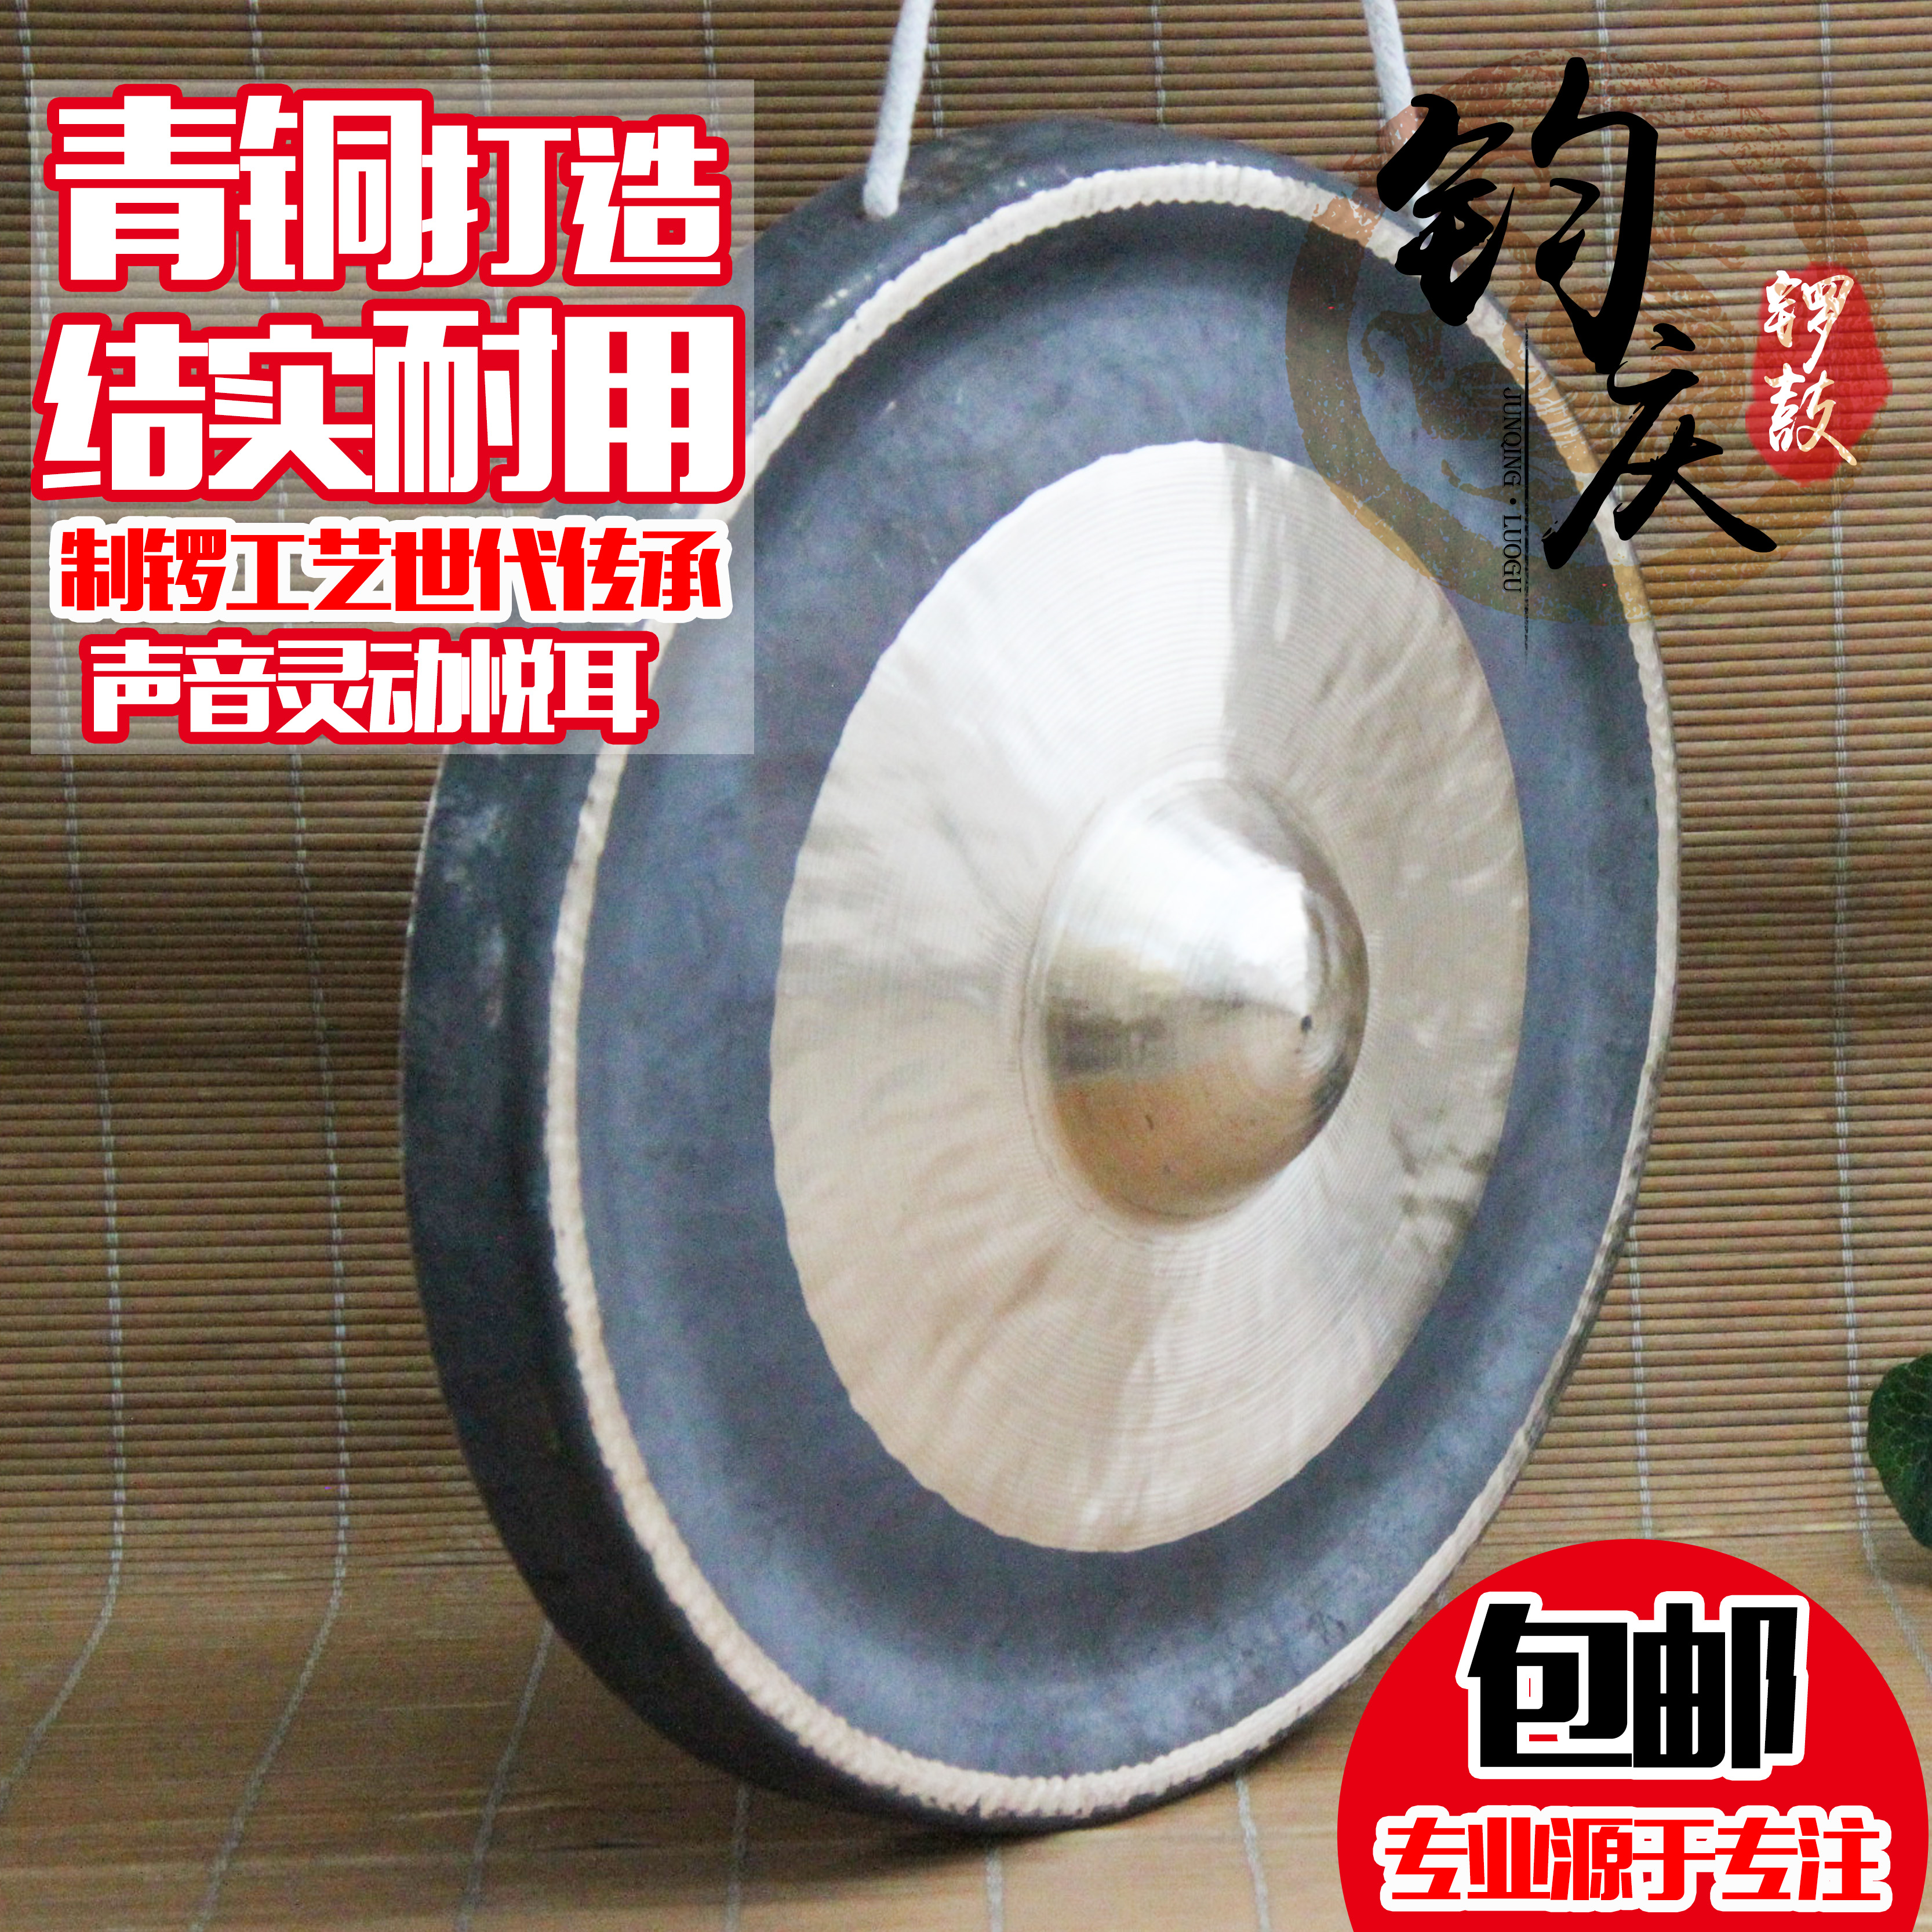 Junqing Bao Gong 20-35 Barium Gong Knot Gong Bronze Gong RingIng Copper Gong Legal Instrument Folk Music Special 